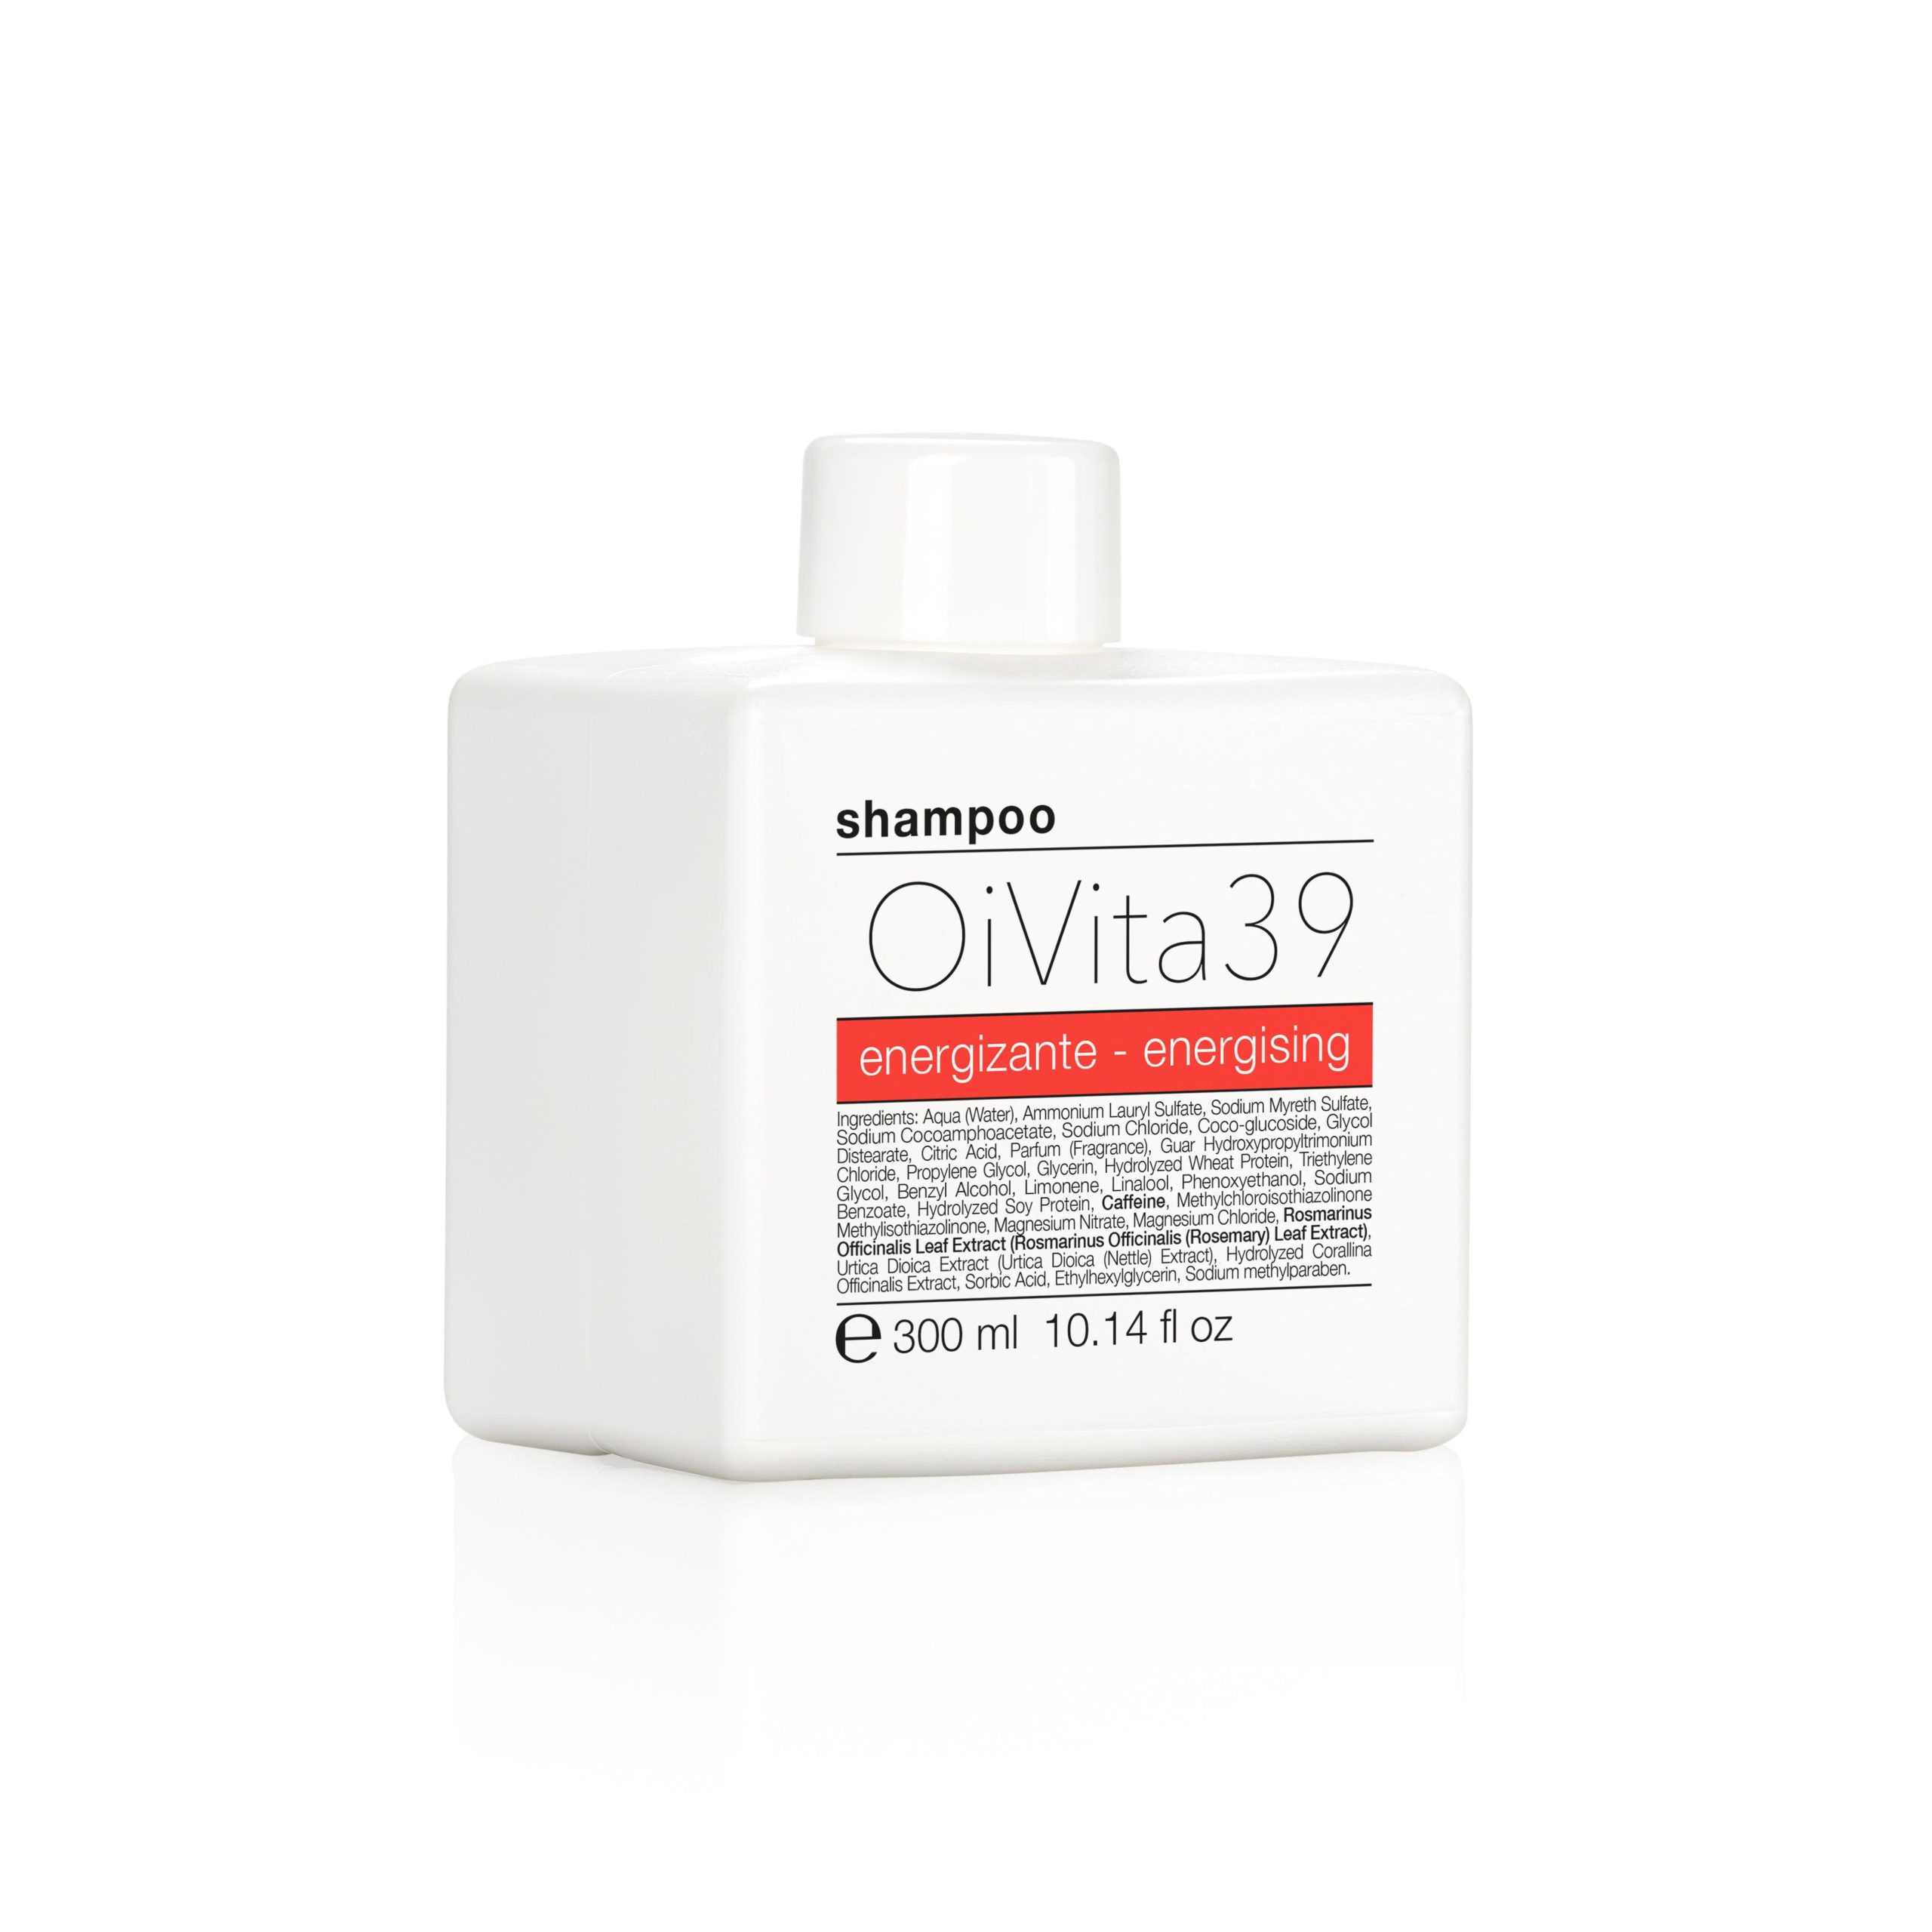 shampoo-energising-300ml-oivita39-www.oivita39.com